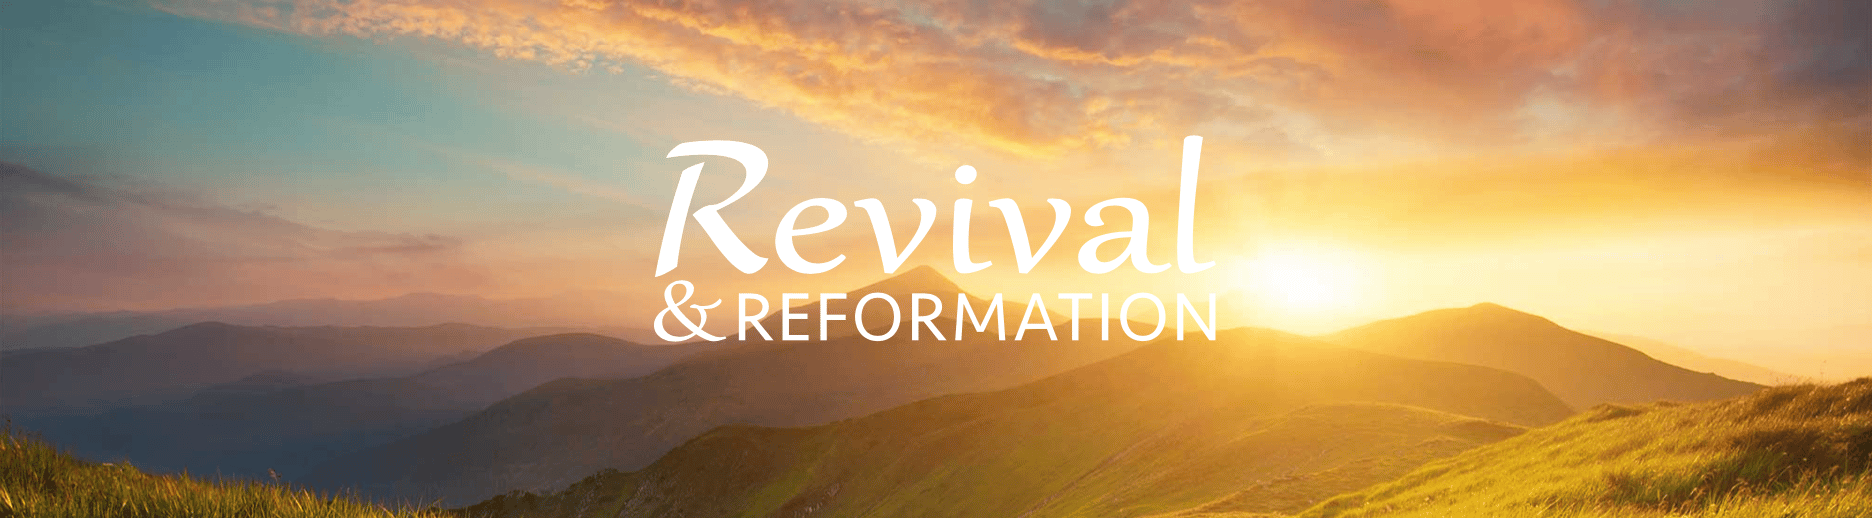 Revival & Reformation I Will GO